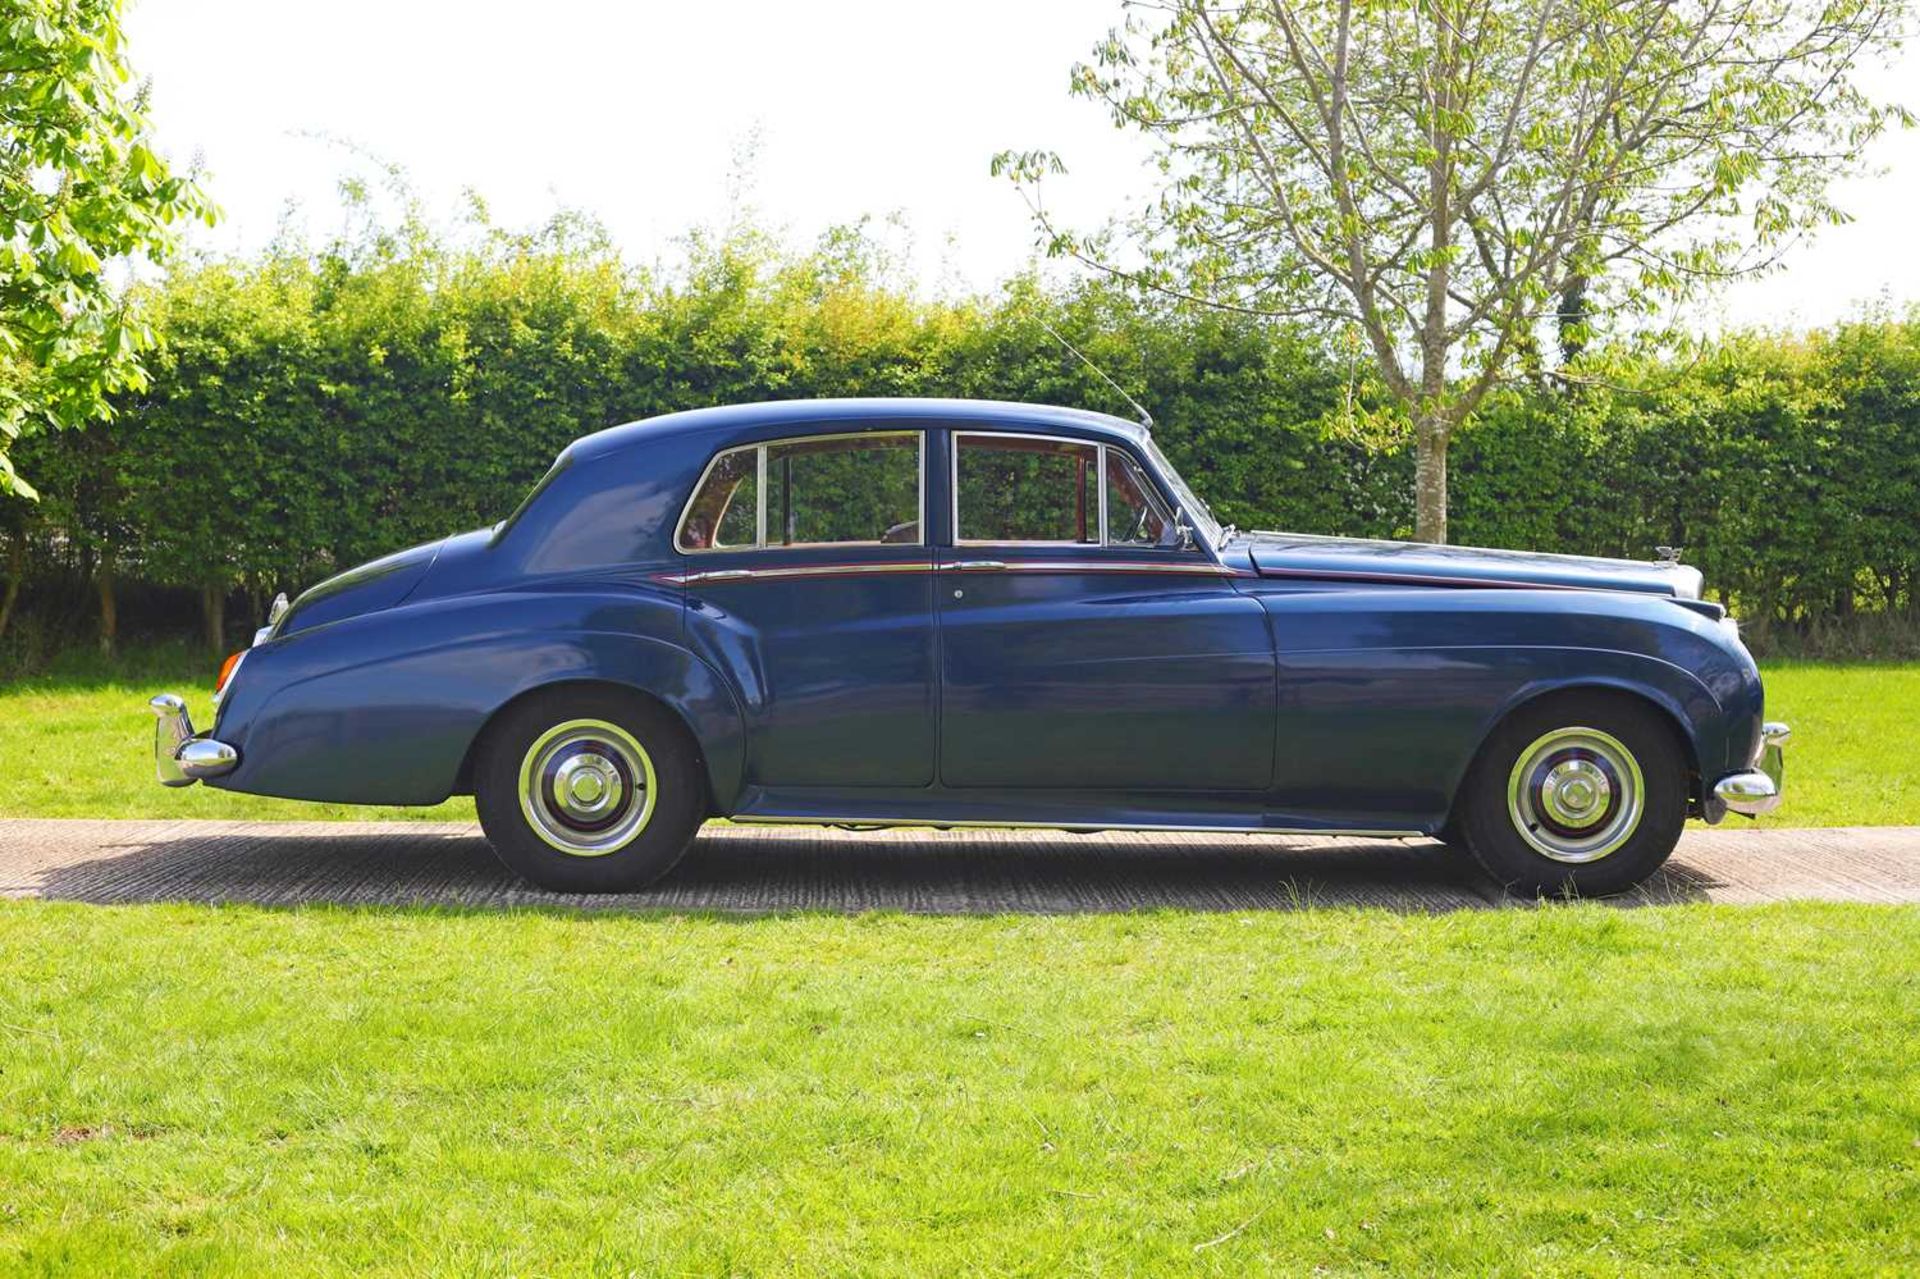 1957 Bentley S1 (E-series) Saloon - Image 2 of 71